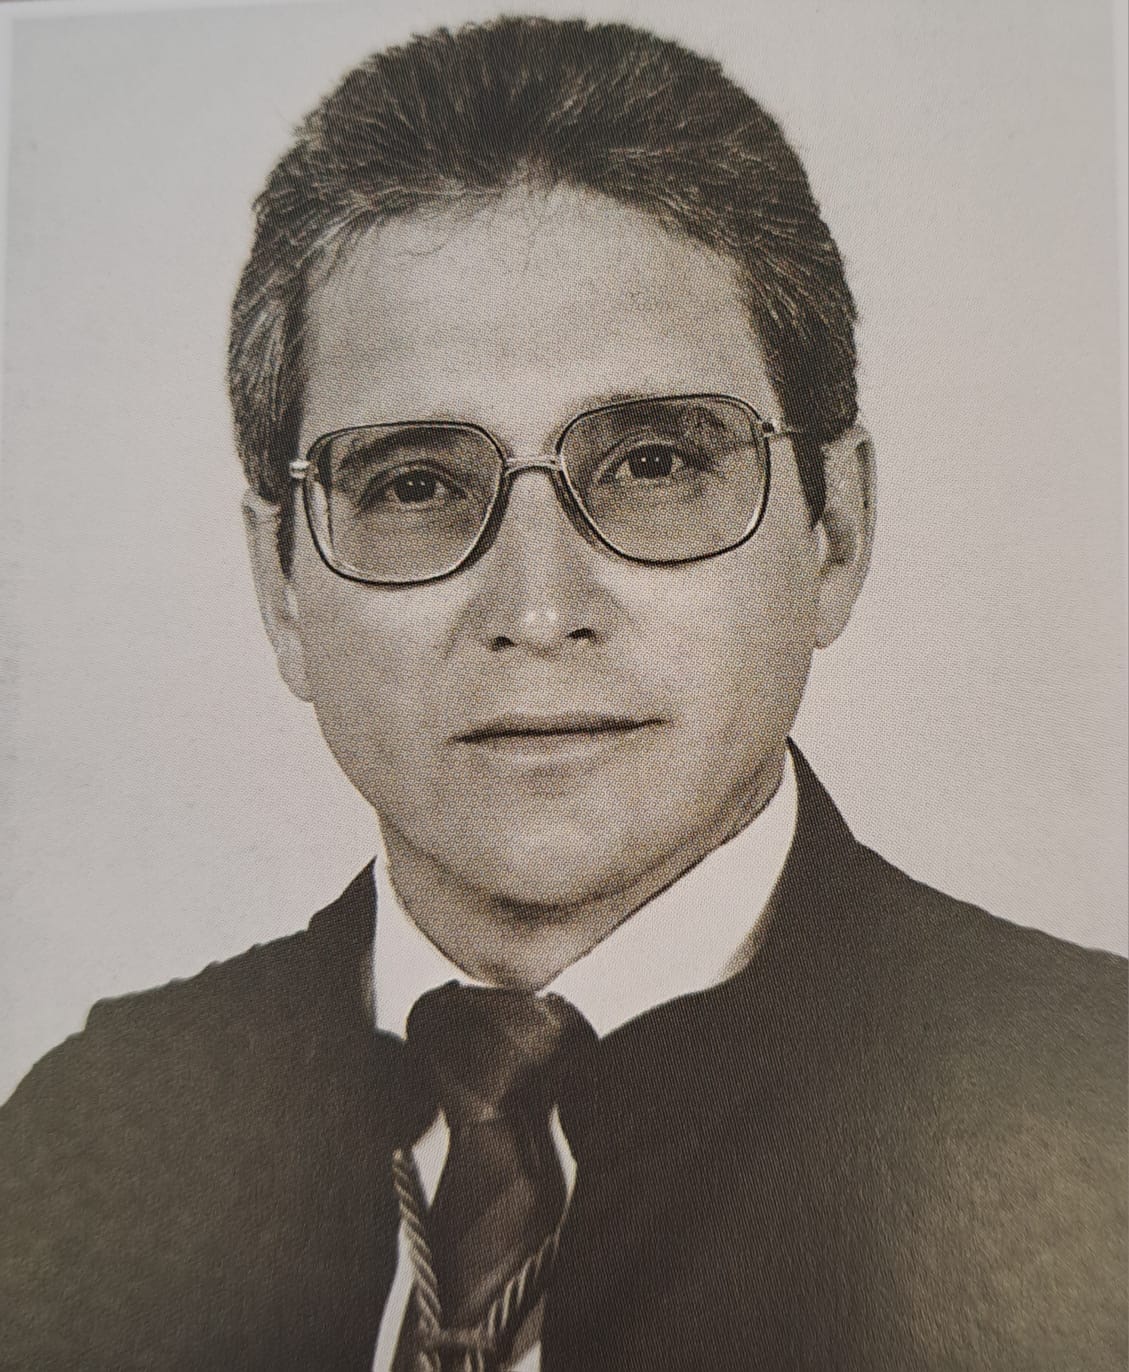 José Maria de Oliveira Lucena